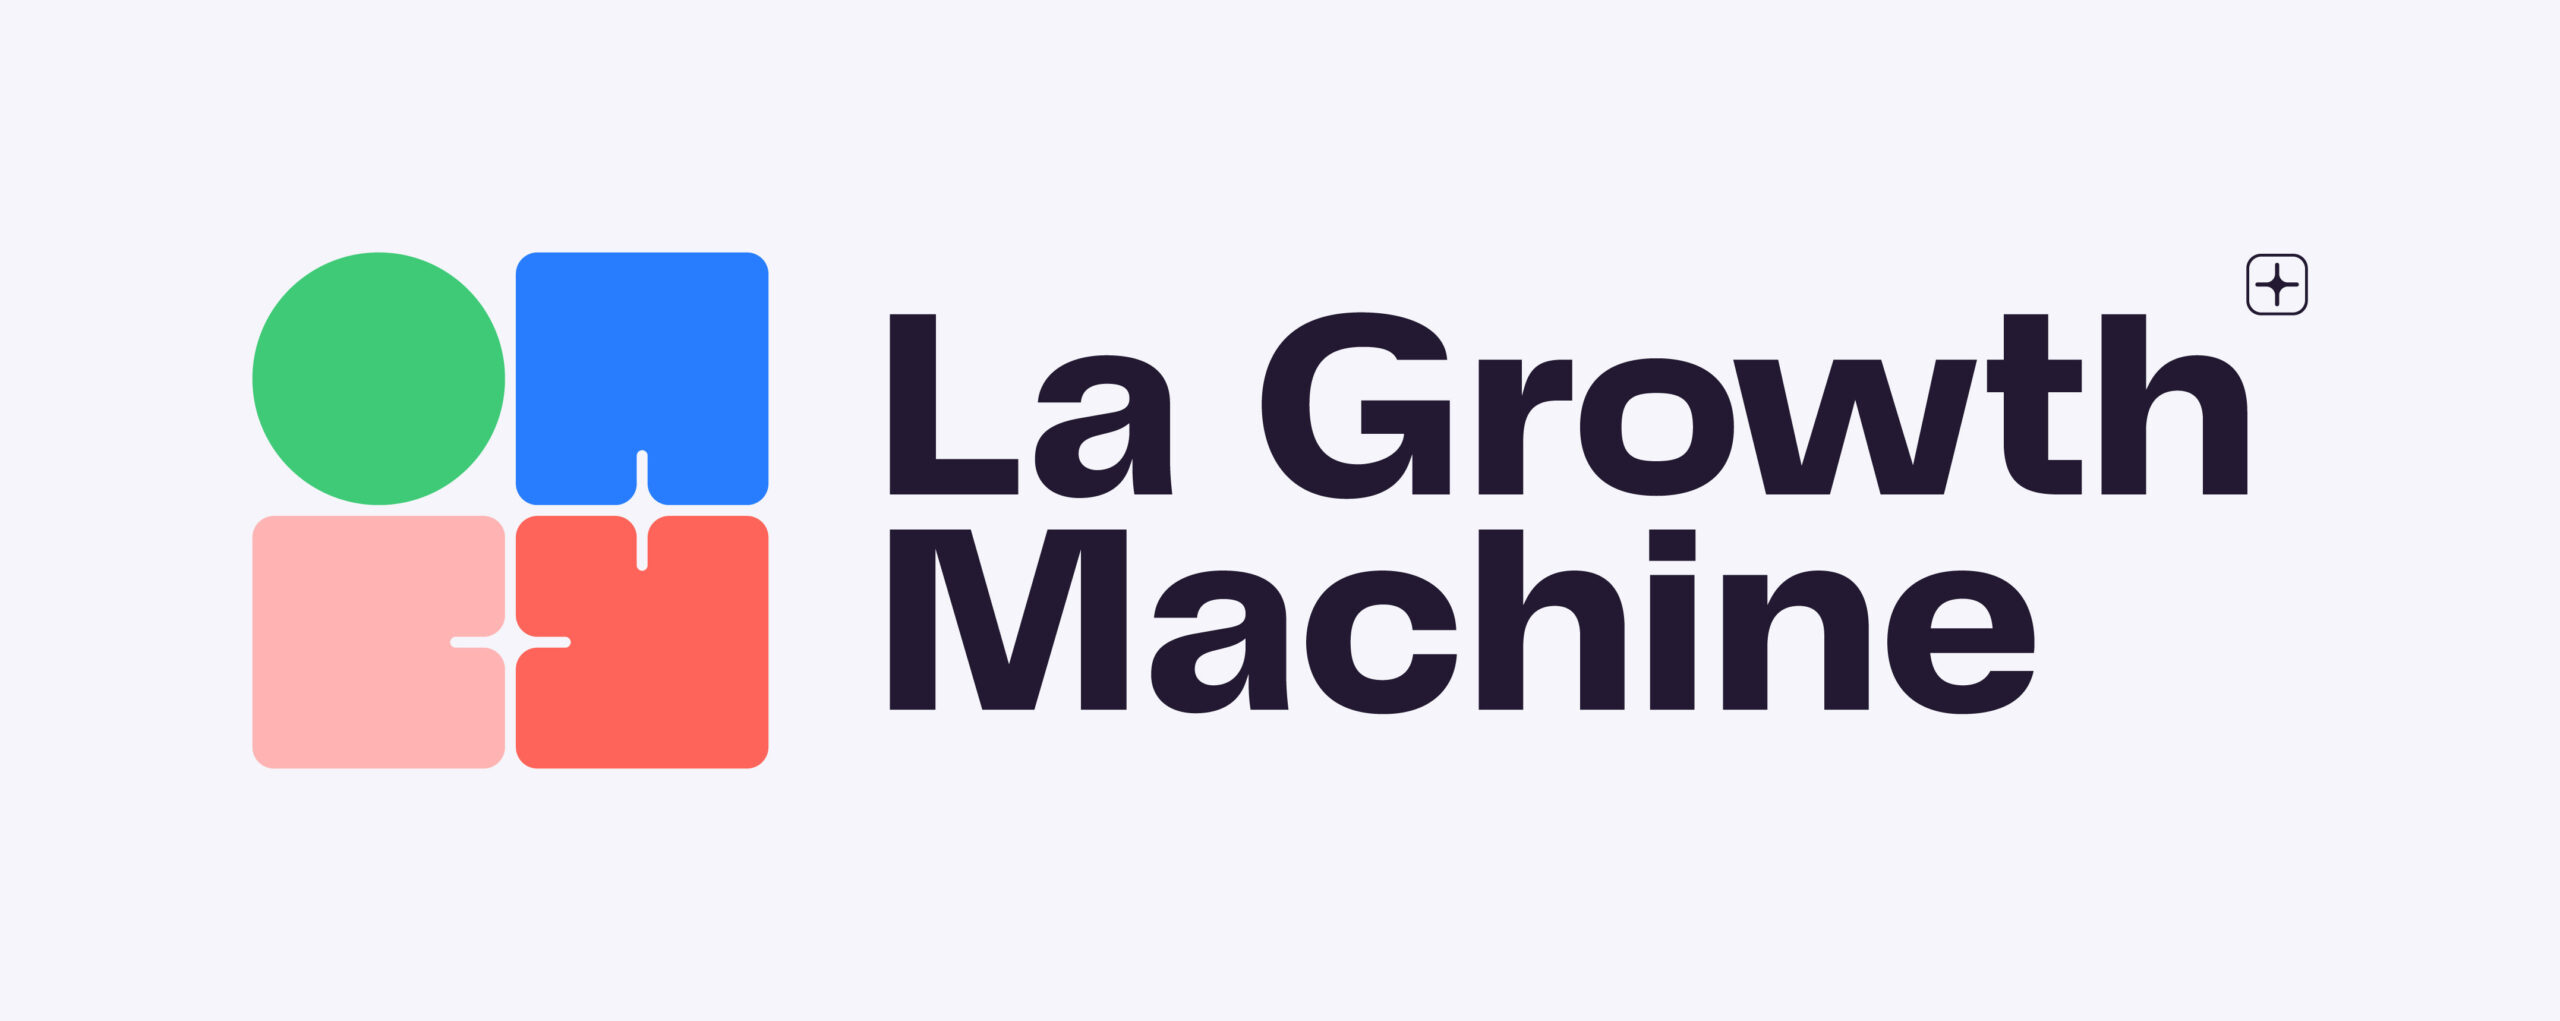 The Growth Machine logo.